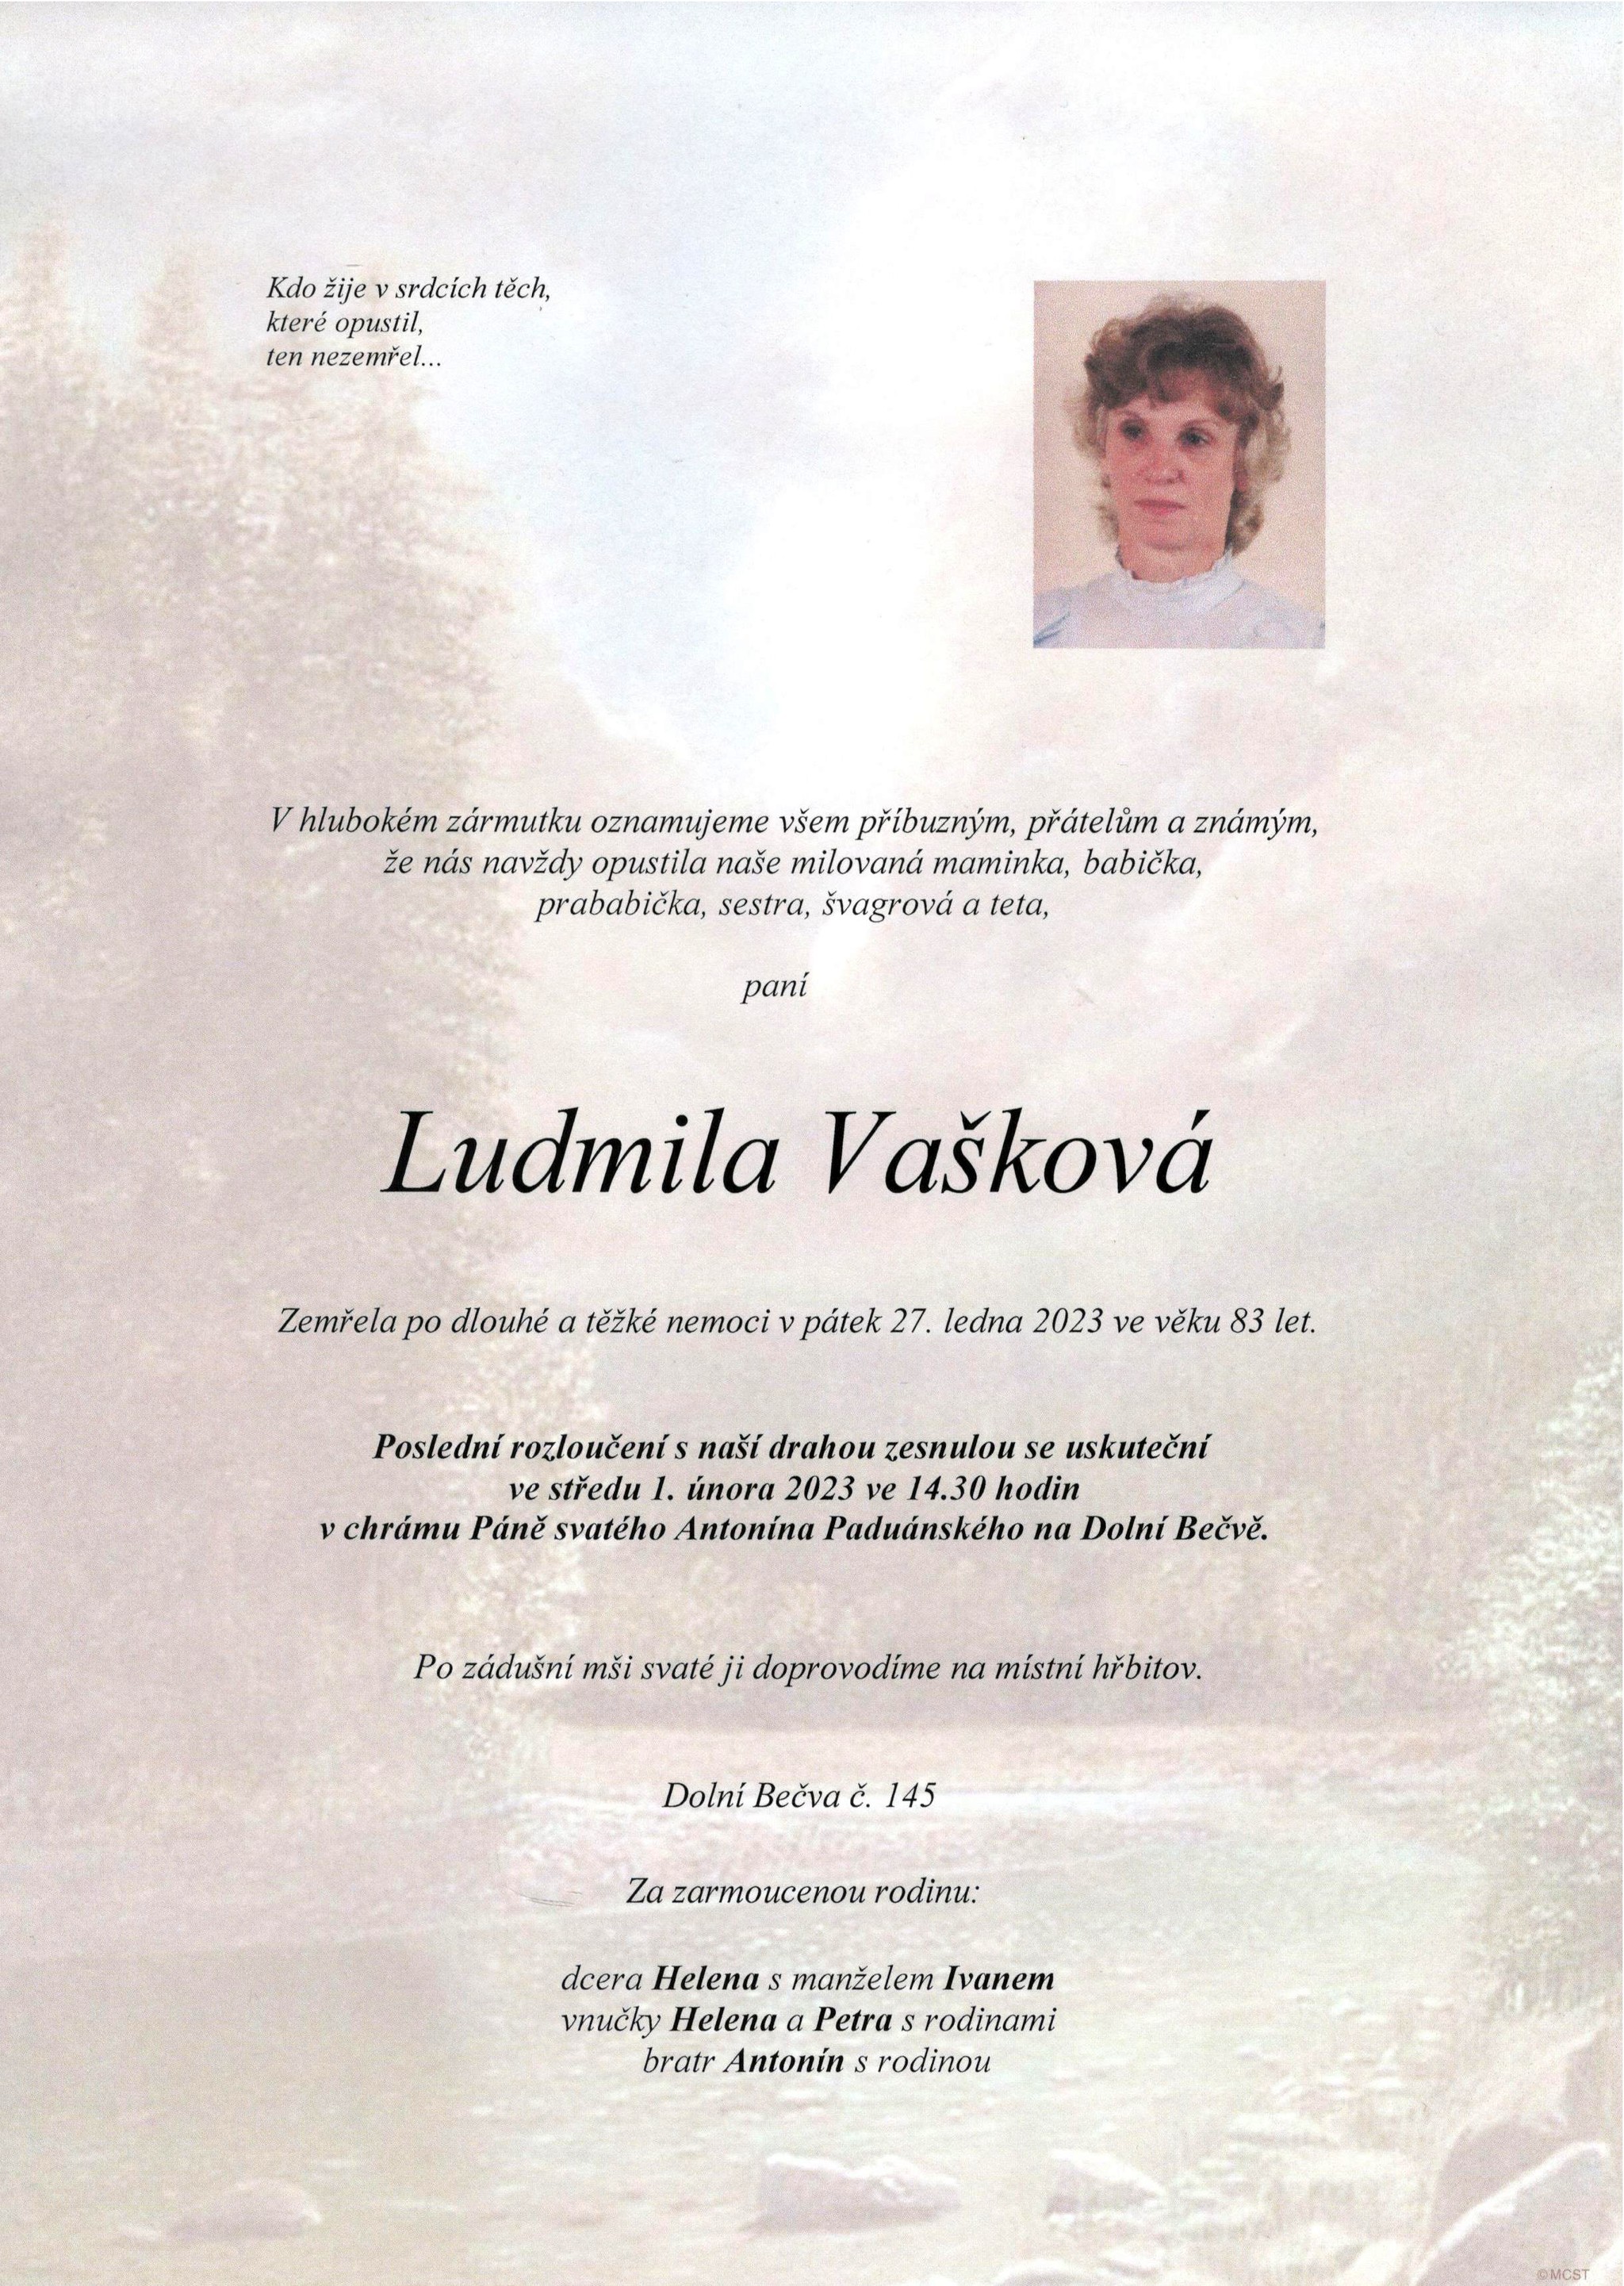 Ludmila Vašková